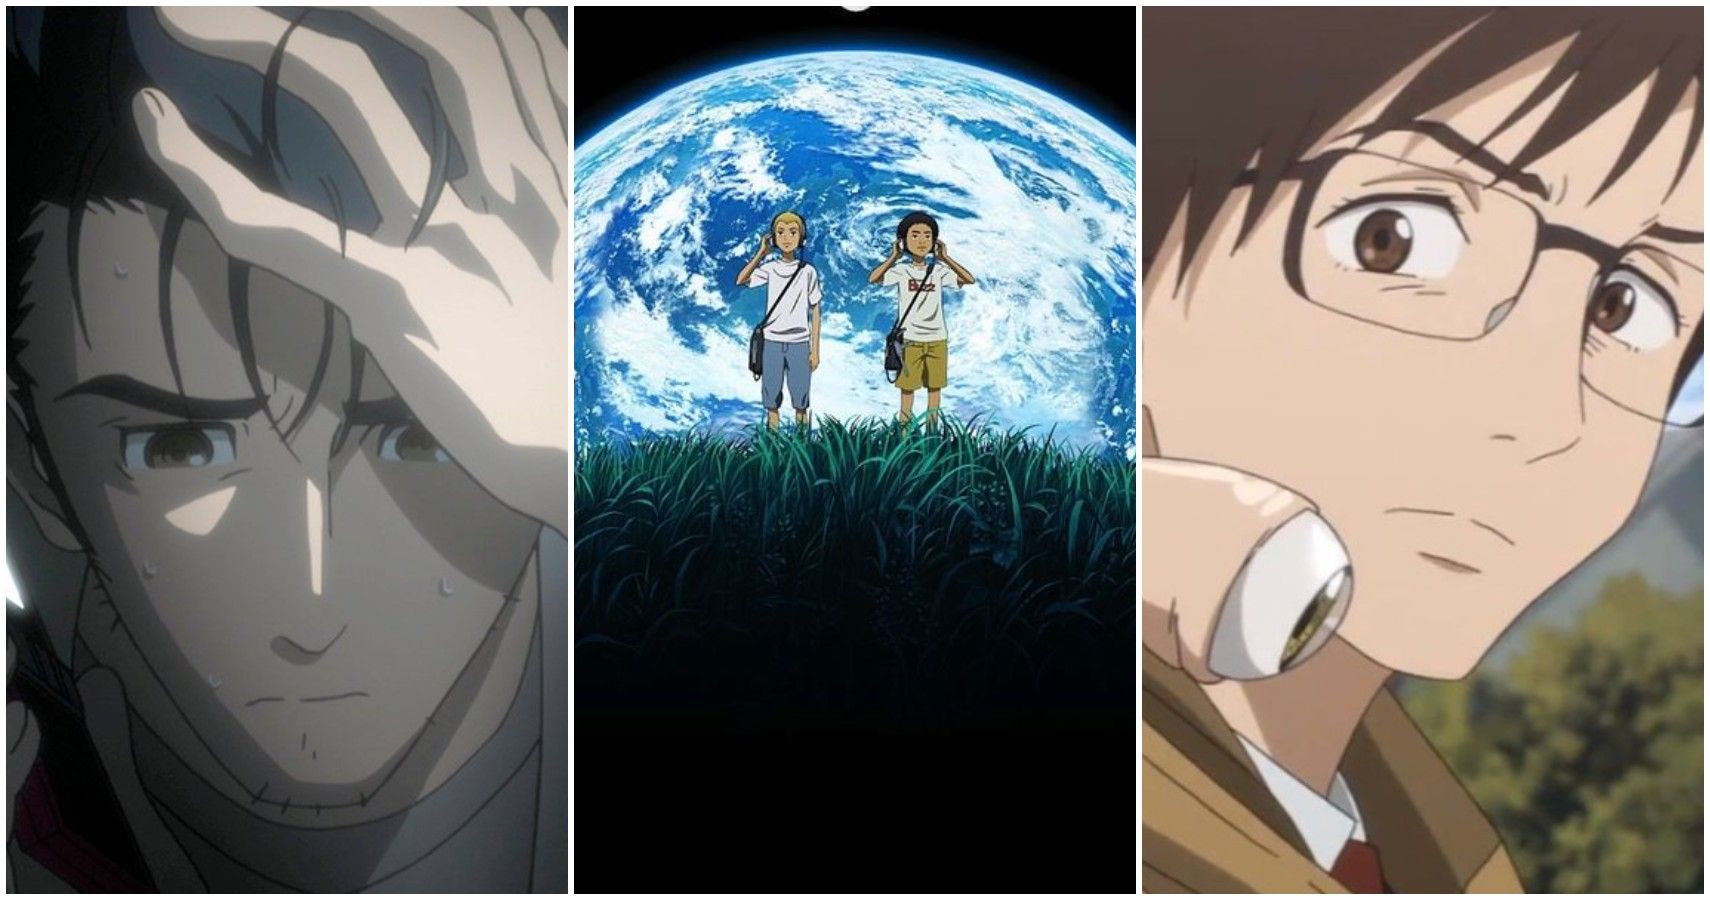 Parasyte  Anime, Anime films, Anime reccomendations